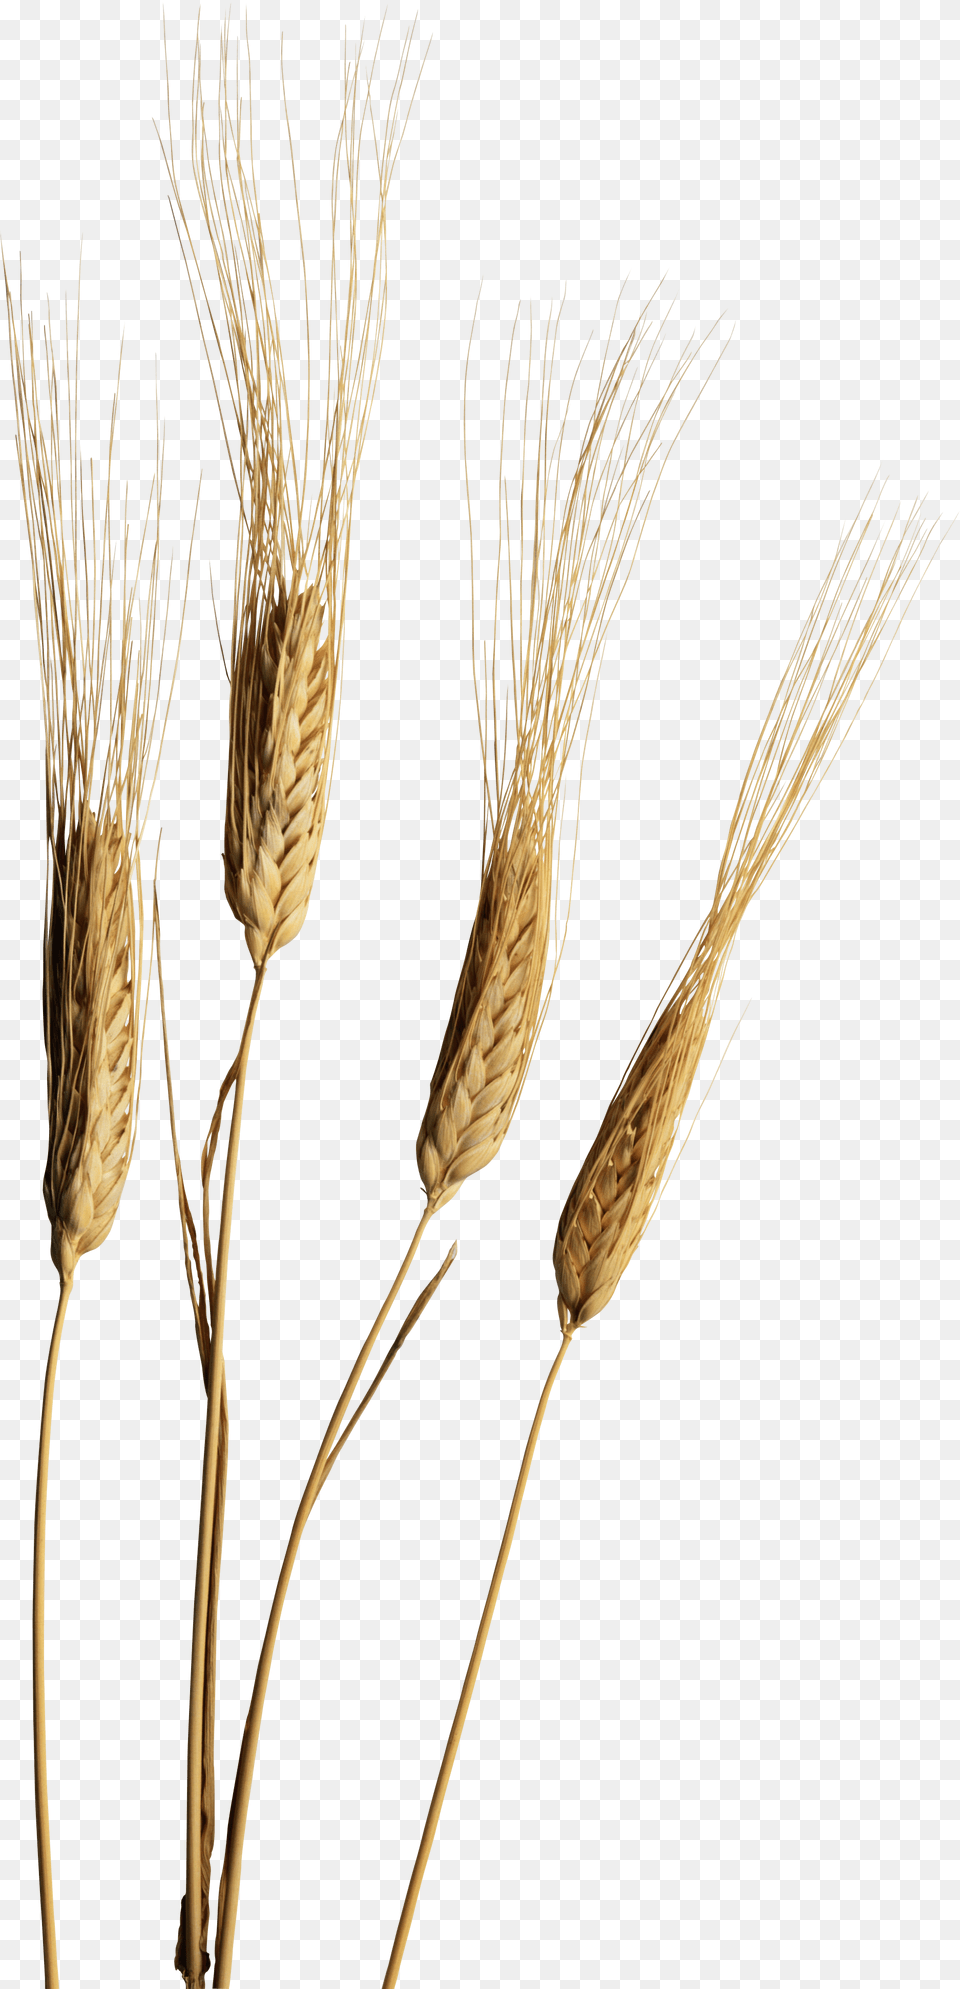 Koloski Rasteniya, Food, Grain, Plant, Produce Png